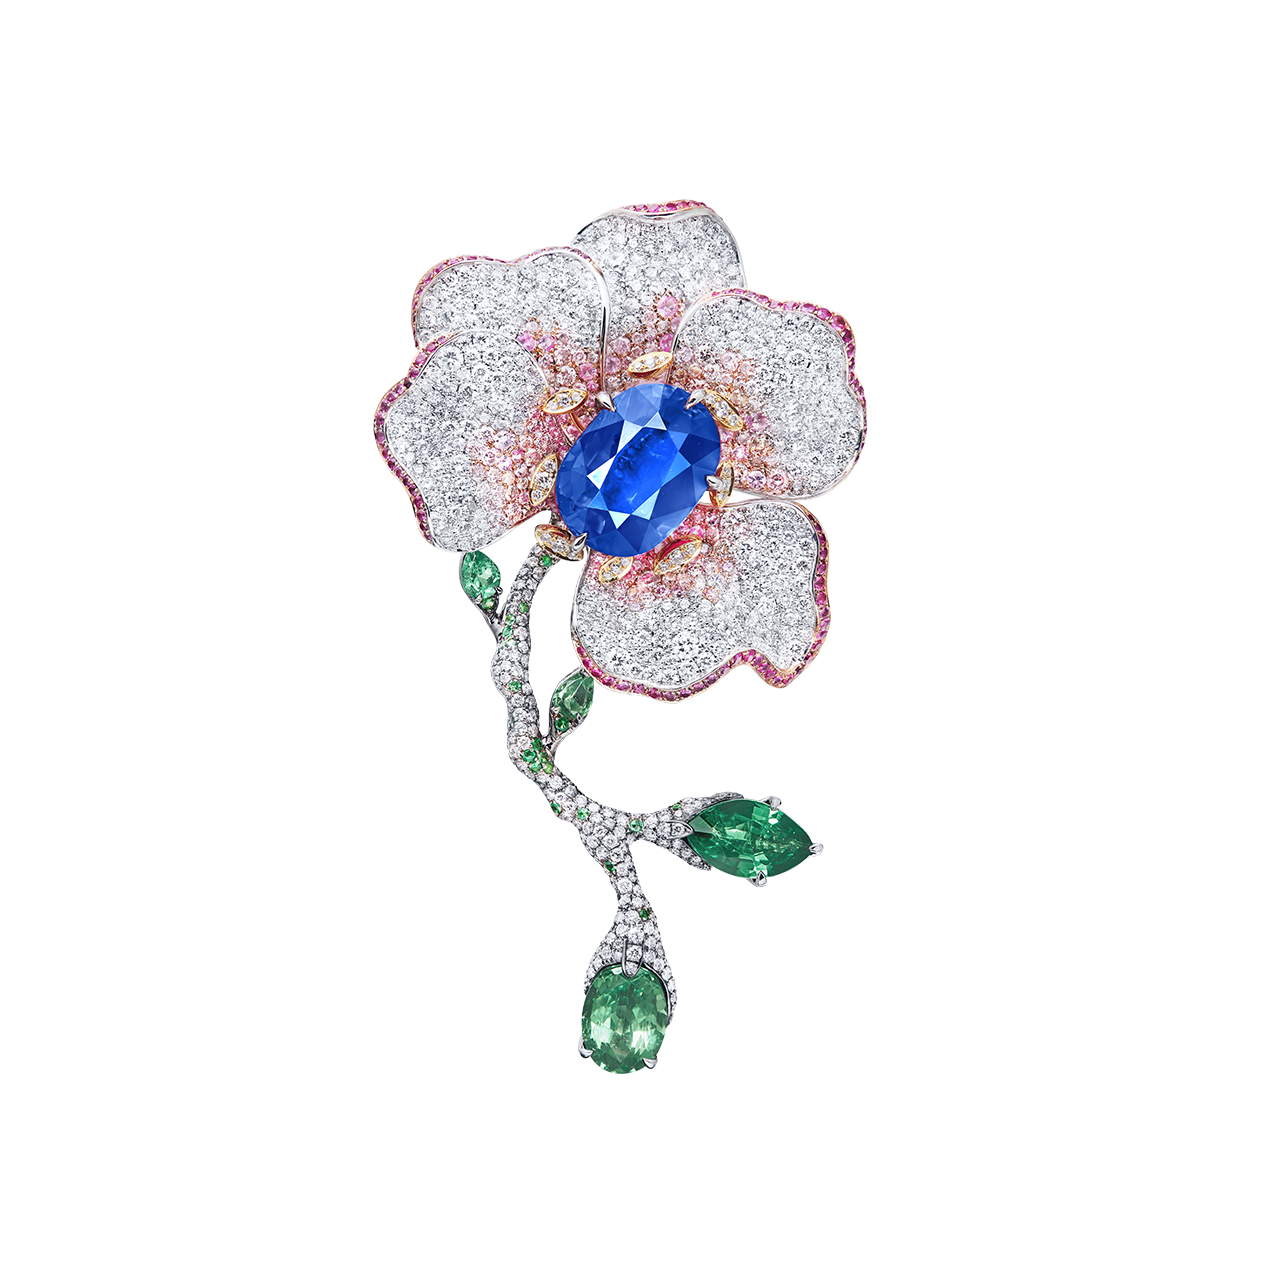 斯里蘭卡皇家藍藍寶鑽石胸針 8.09克拉
Royal Blue Sapphire, Multi - 
Colored Gemstone and
Diamond Brooch